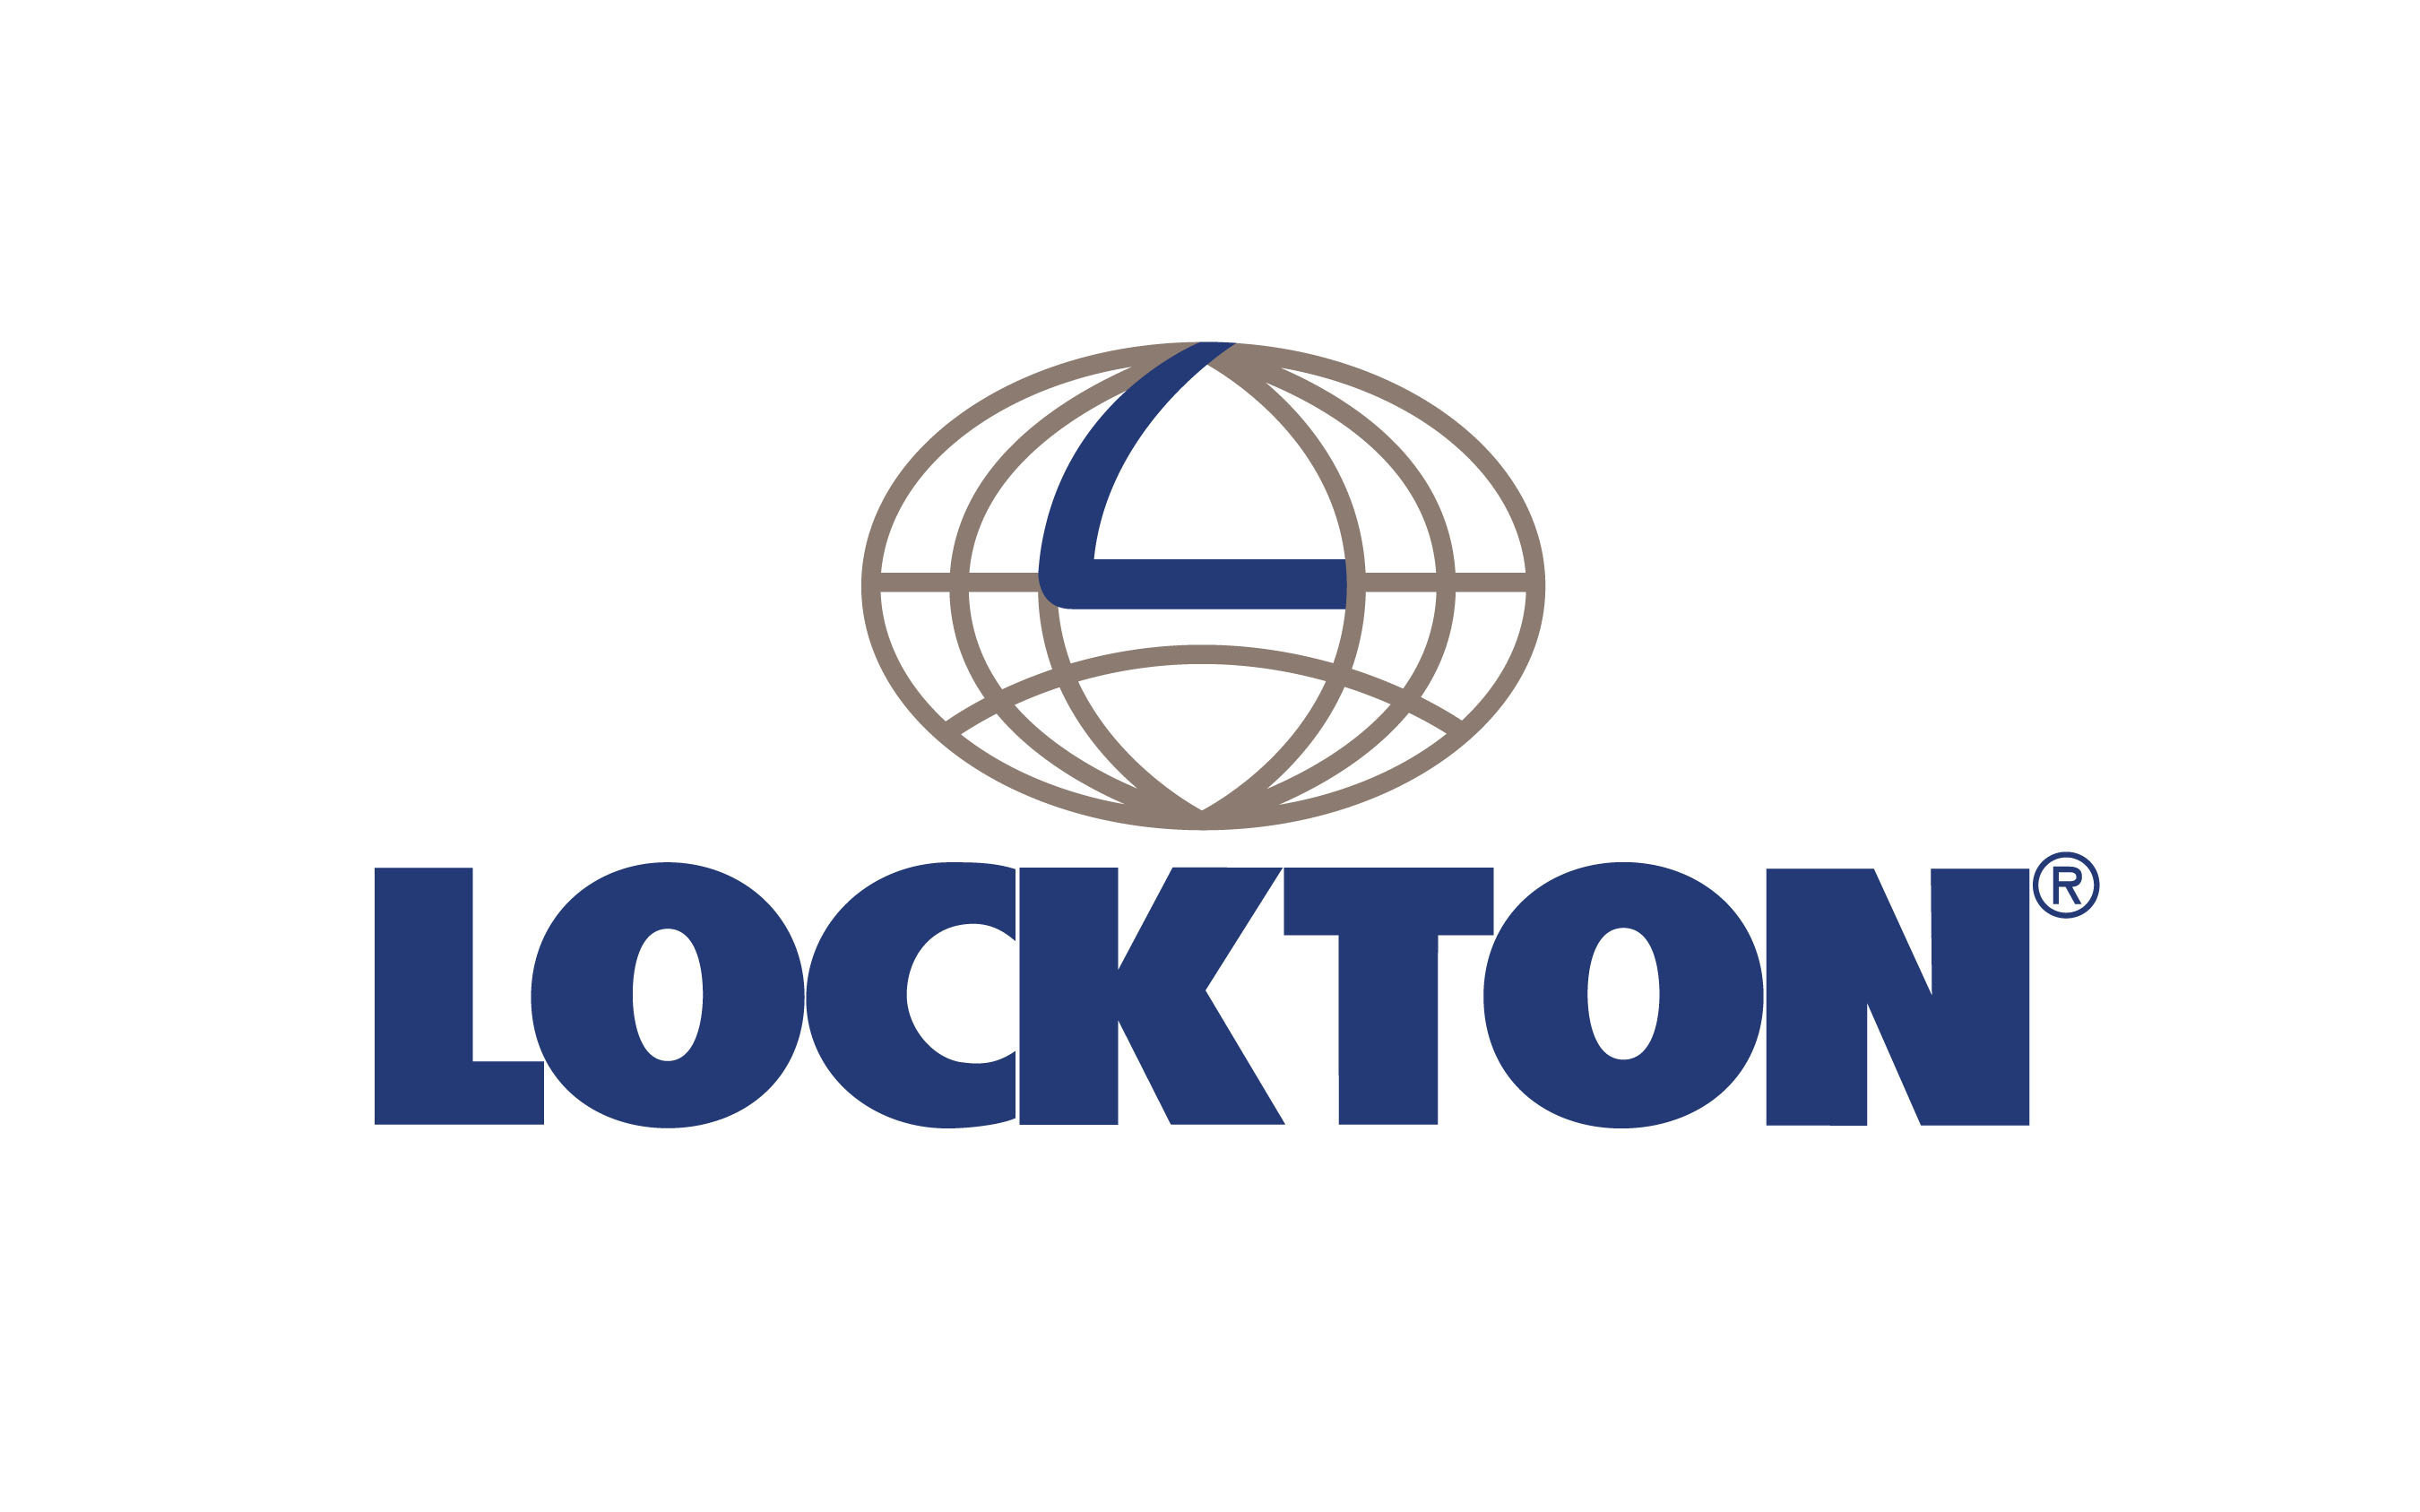 Lockton logo. (PRNewsFoto/Lockton) (PRNewsFoto/)